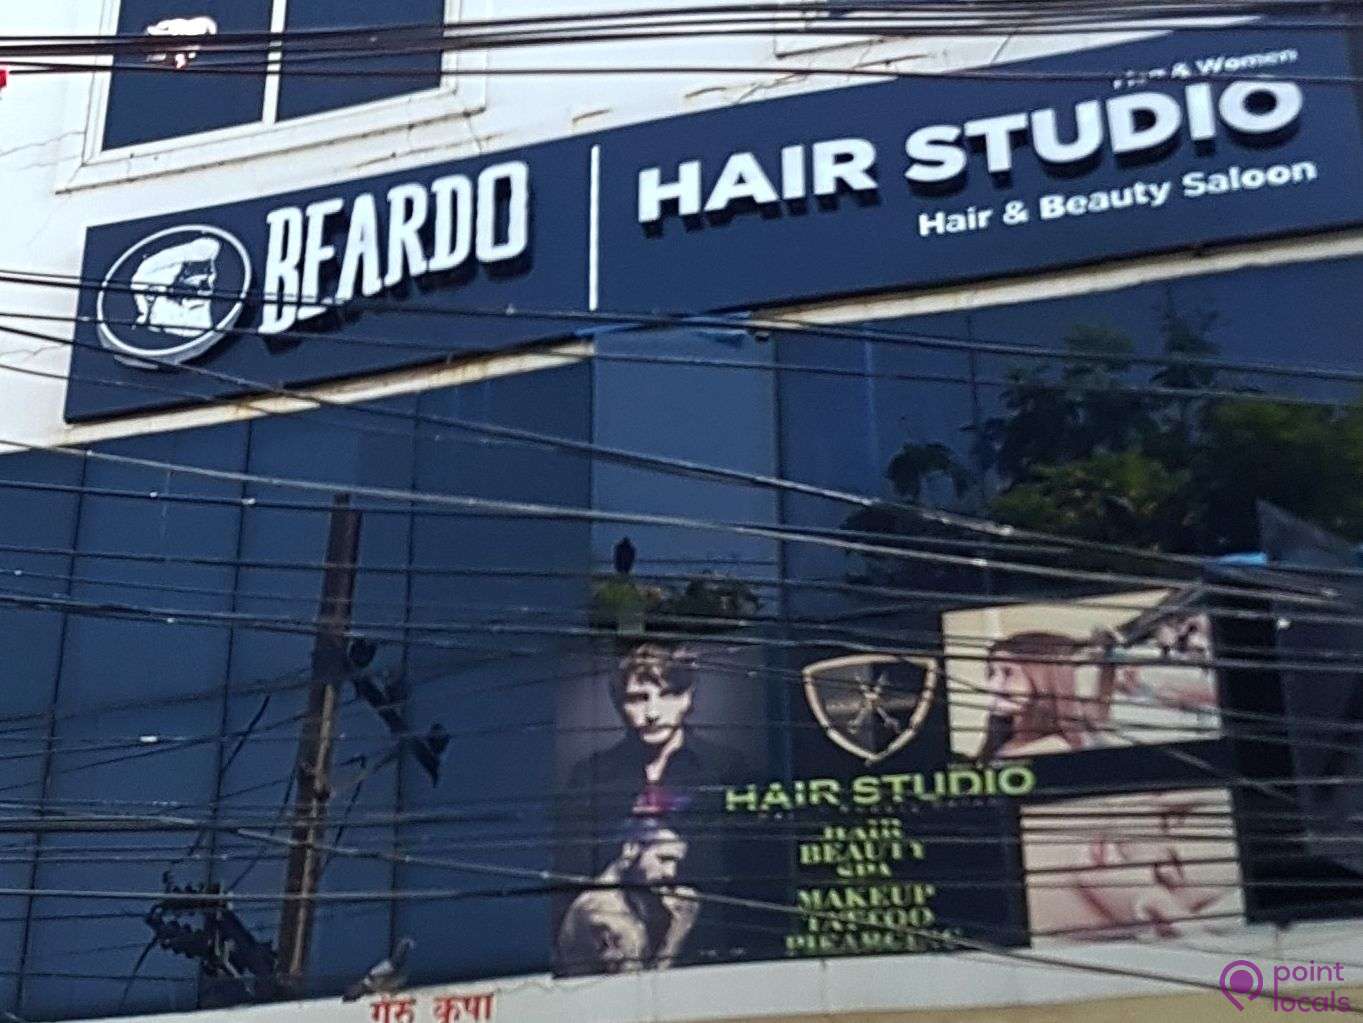 Beardo Hair Studio - Beauty Salon in Hyderabad,Telangana | Pointlocals